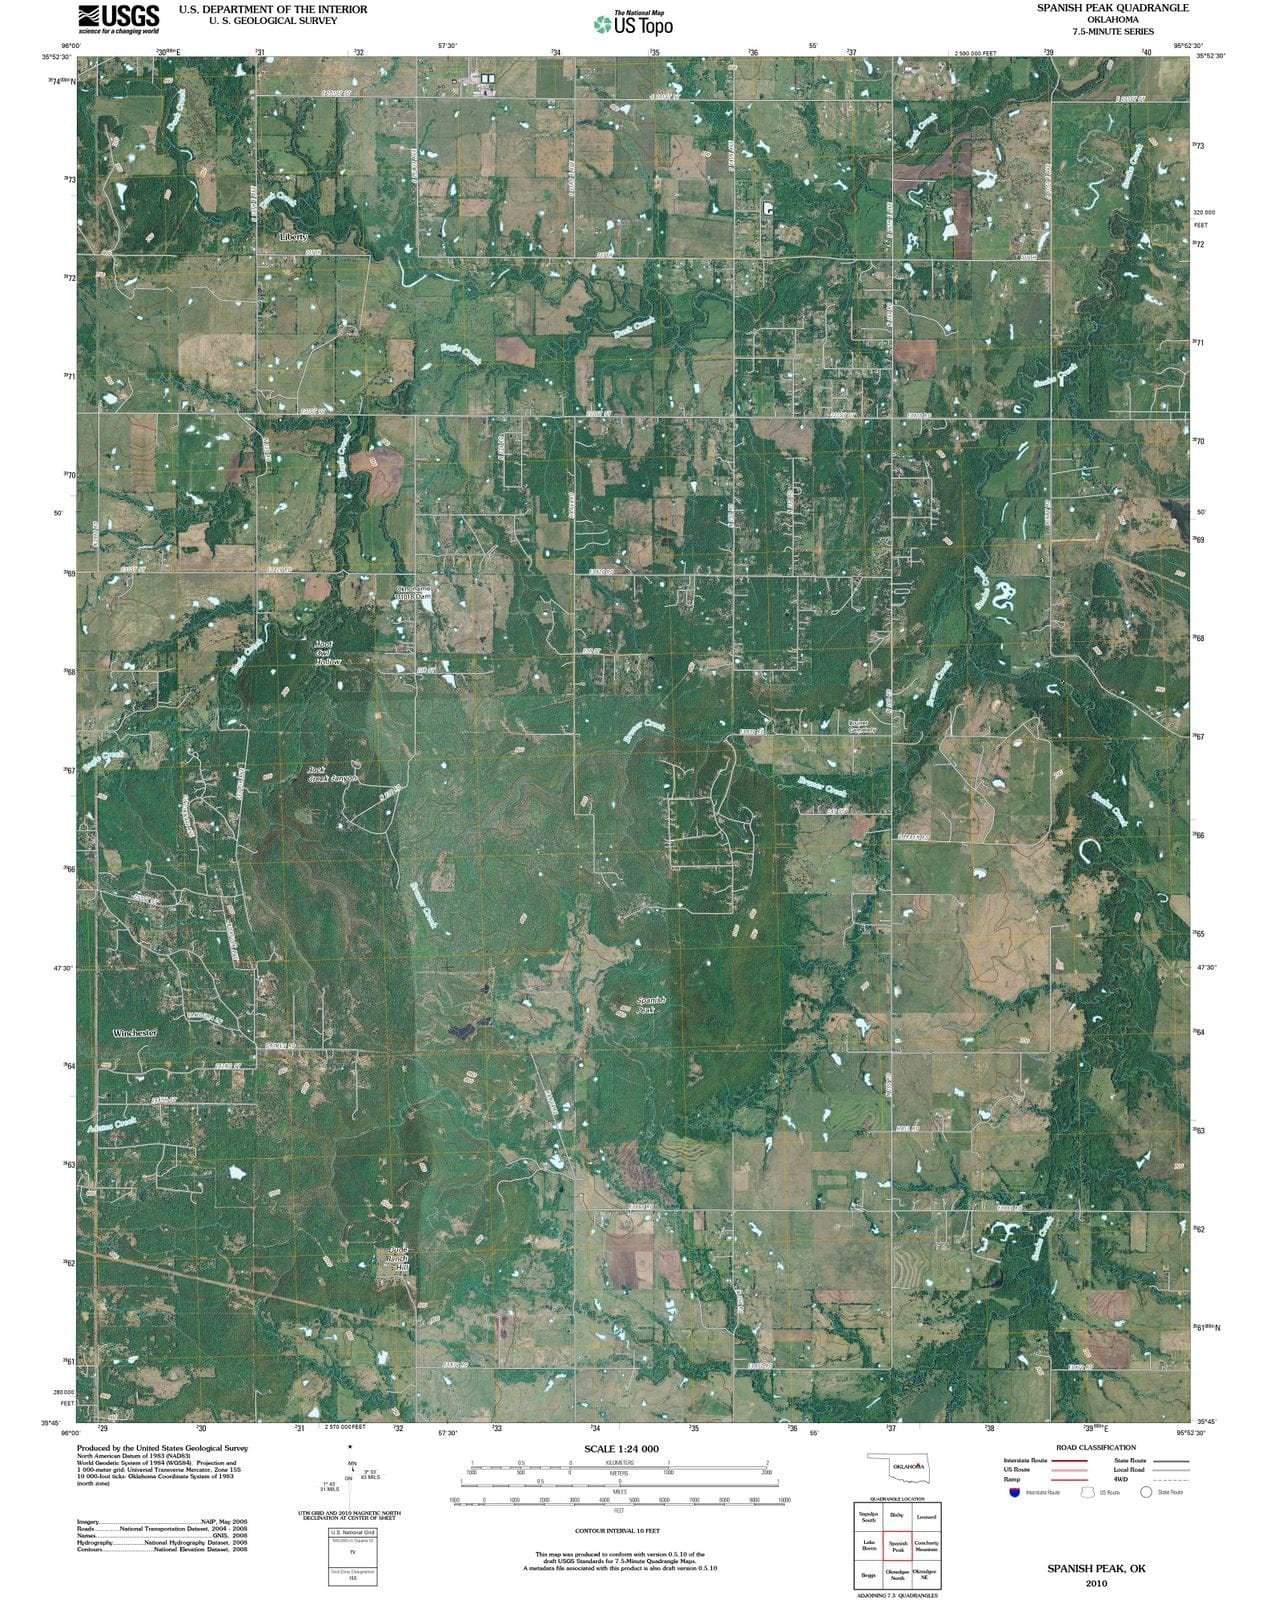 2010 Spanish Peak, OK - Oklahoma - USGS Topographic Map